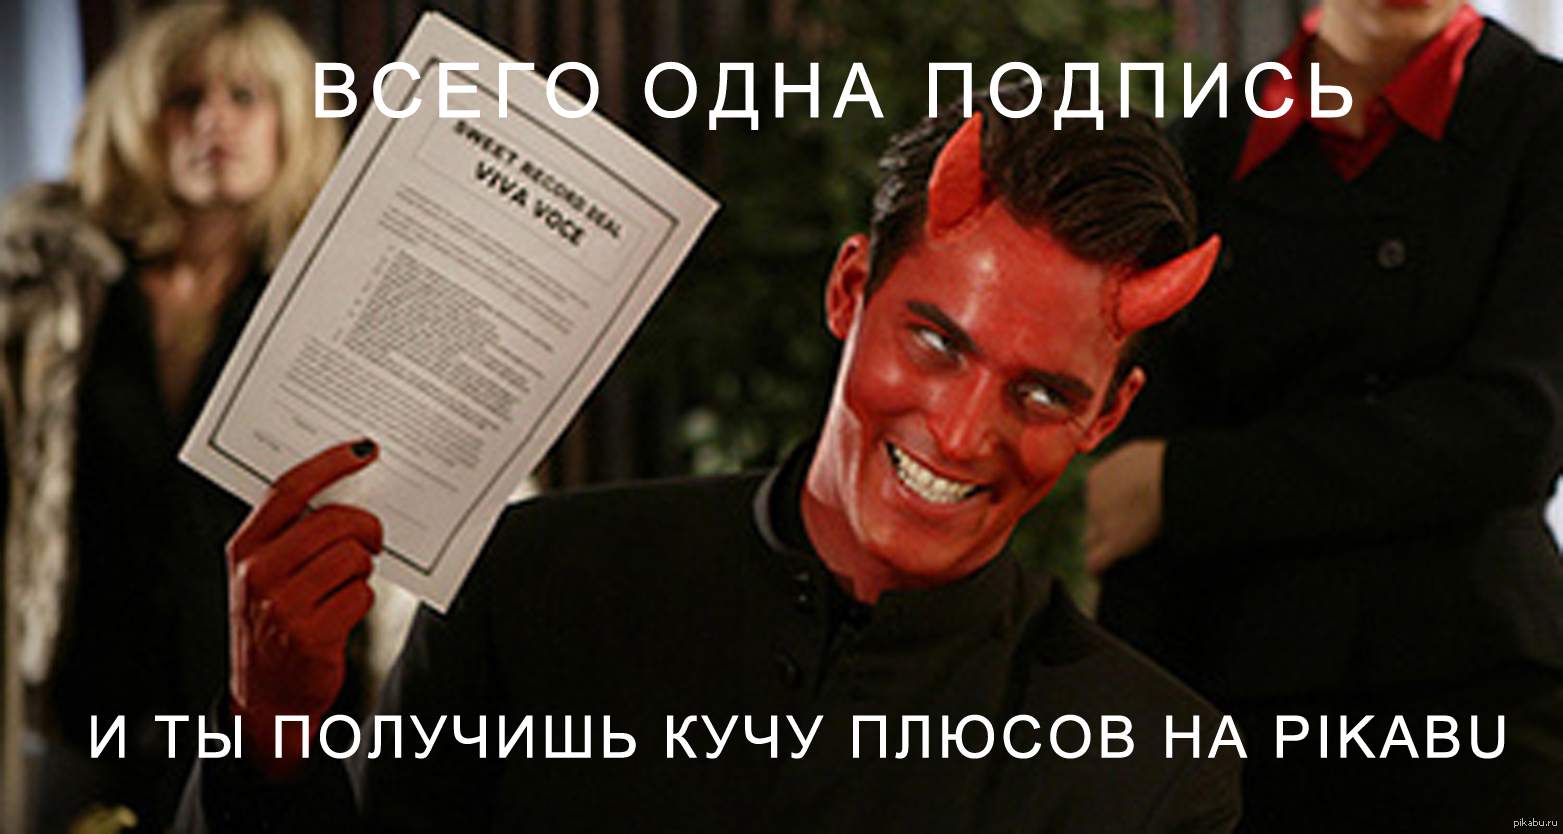 Dealing with the devil. Адвокат дьявола Люцифер. Демон продаж.